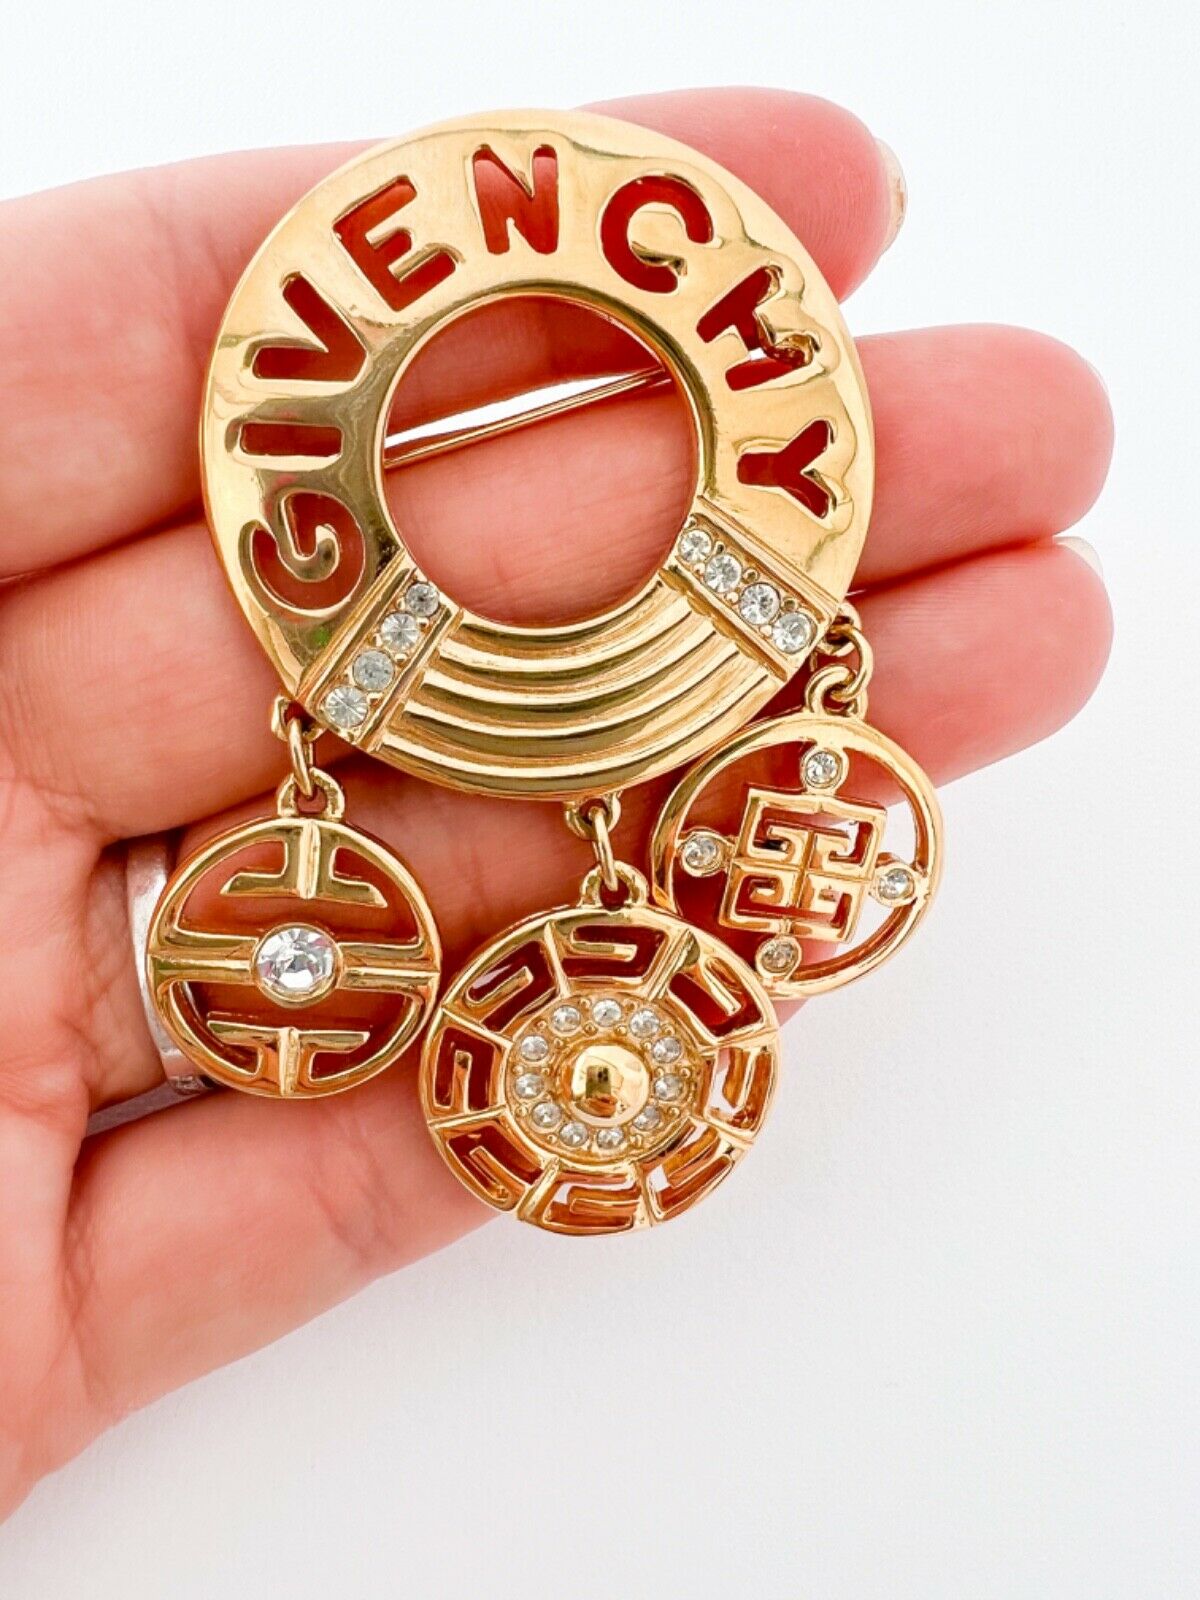 Givenchy Vintage Gold Tone Brooch Pin Logo Rhinestone Dangling Charms